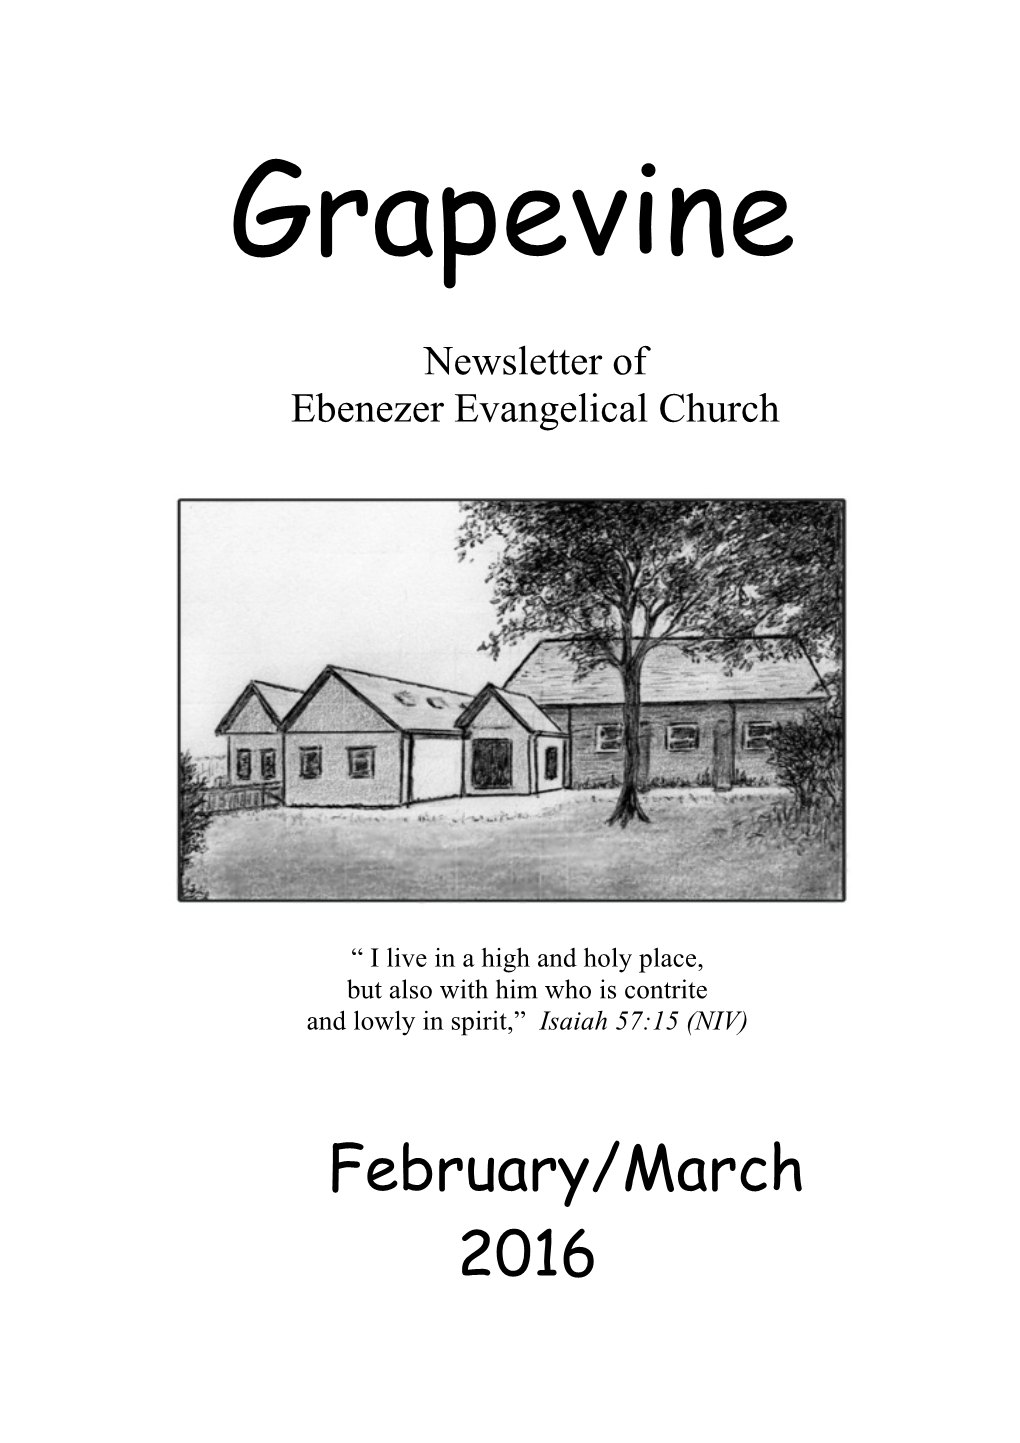 February/March 2016 EBENEZER EVANGELICAL CHURCH Doctrinal Statement